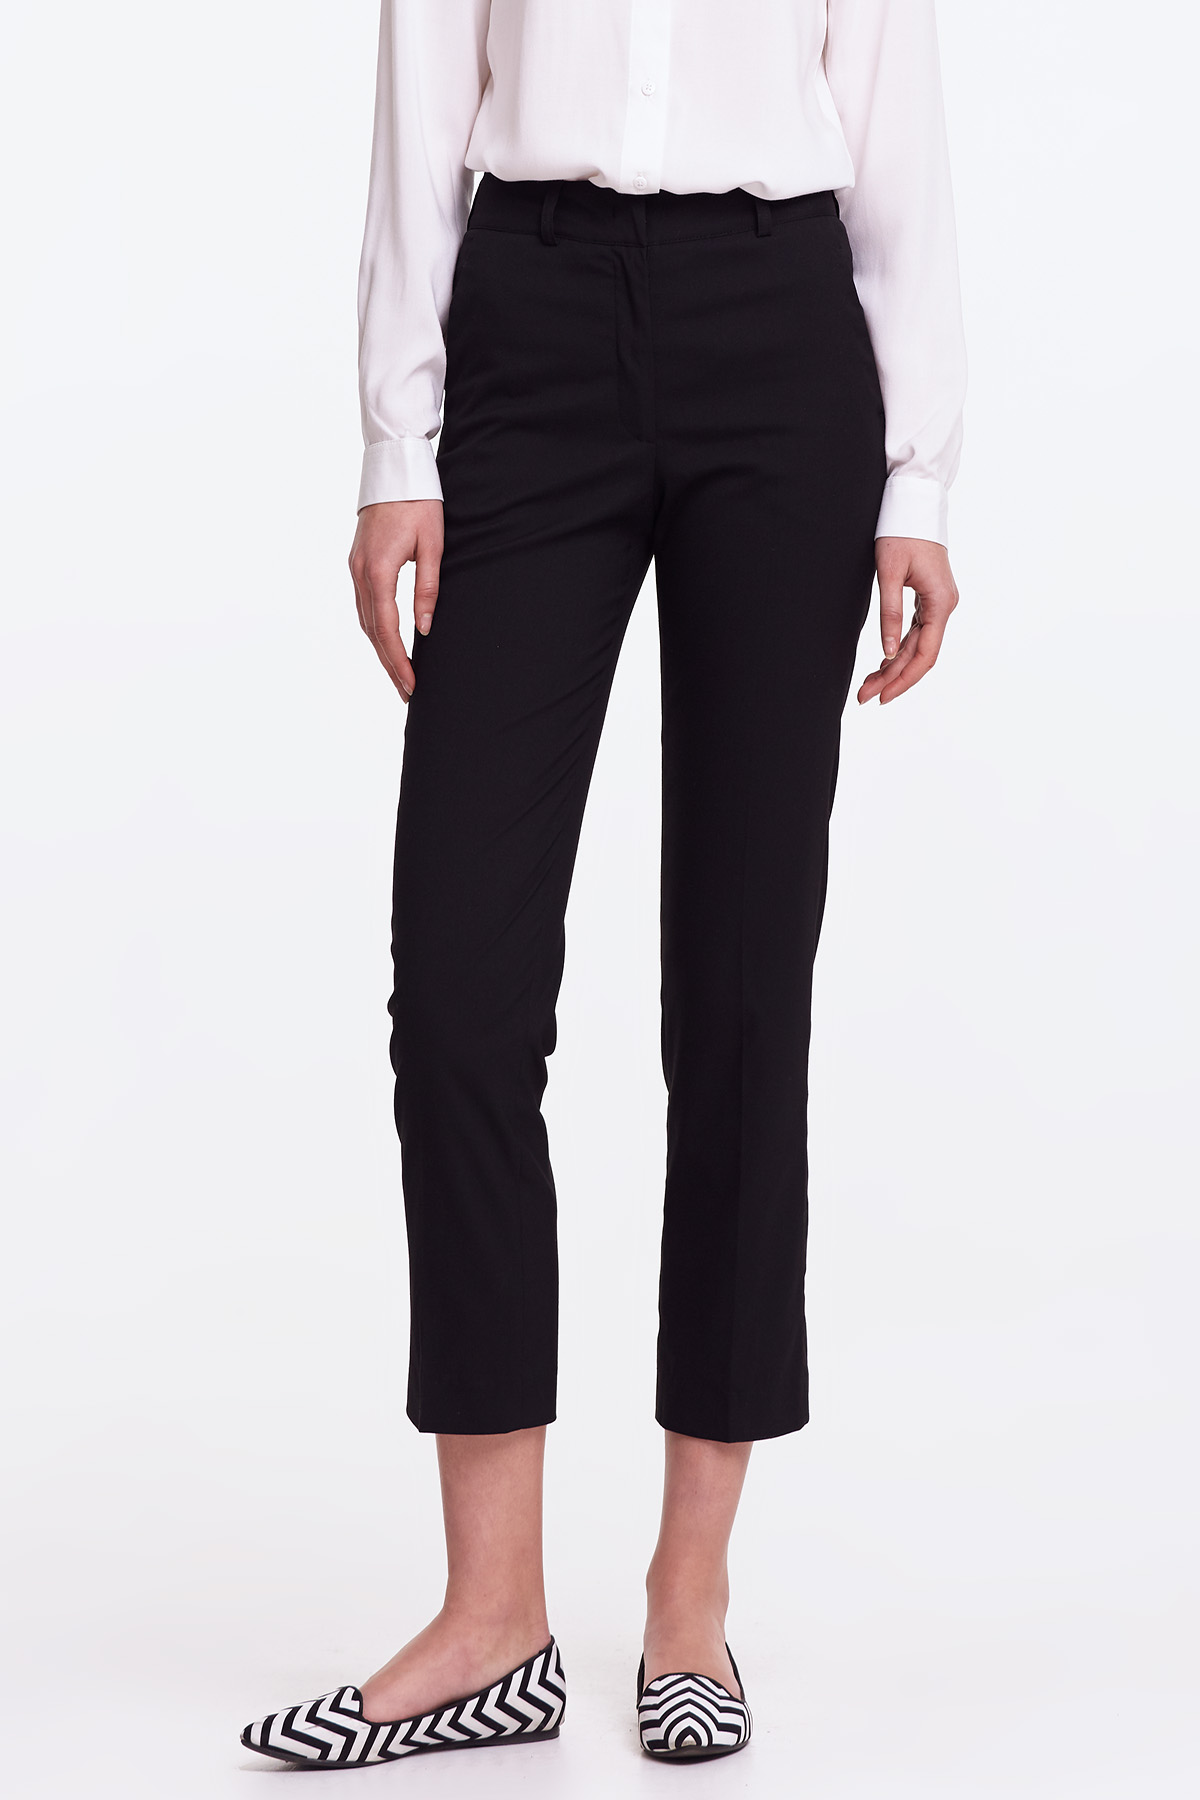 Short black trousers, photo 2